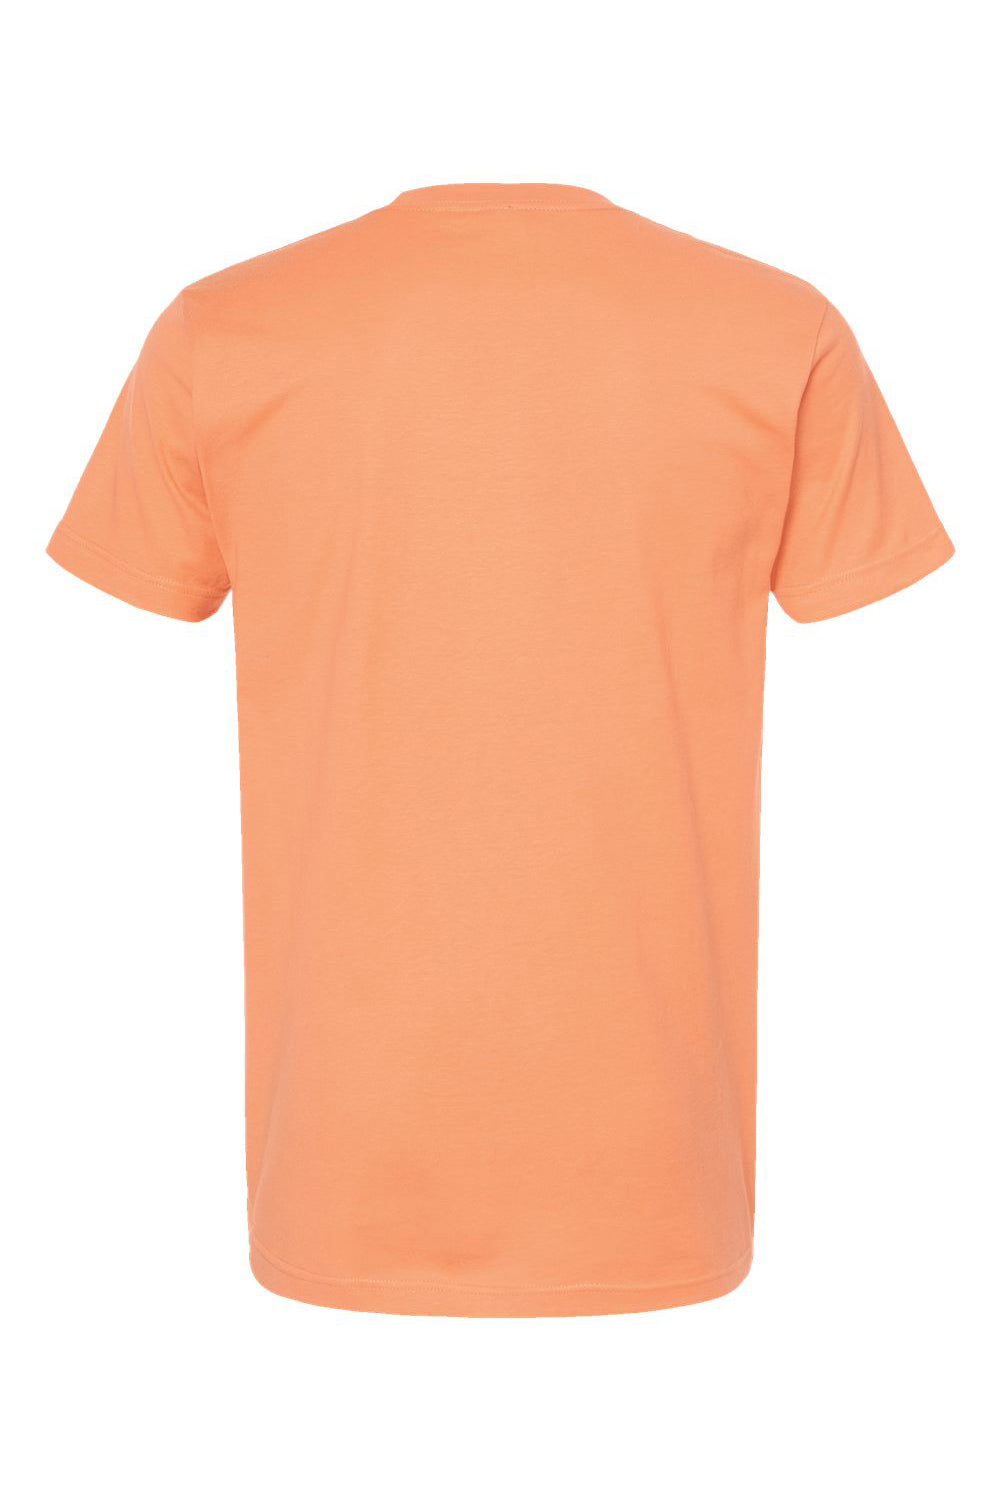 Tultex 202 Mens Fine Jersey Short Sleeve Crewneck T-Shirt Cantaloupe Orange Flat Back